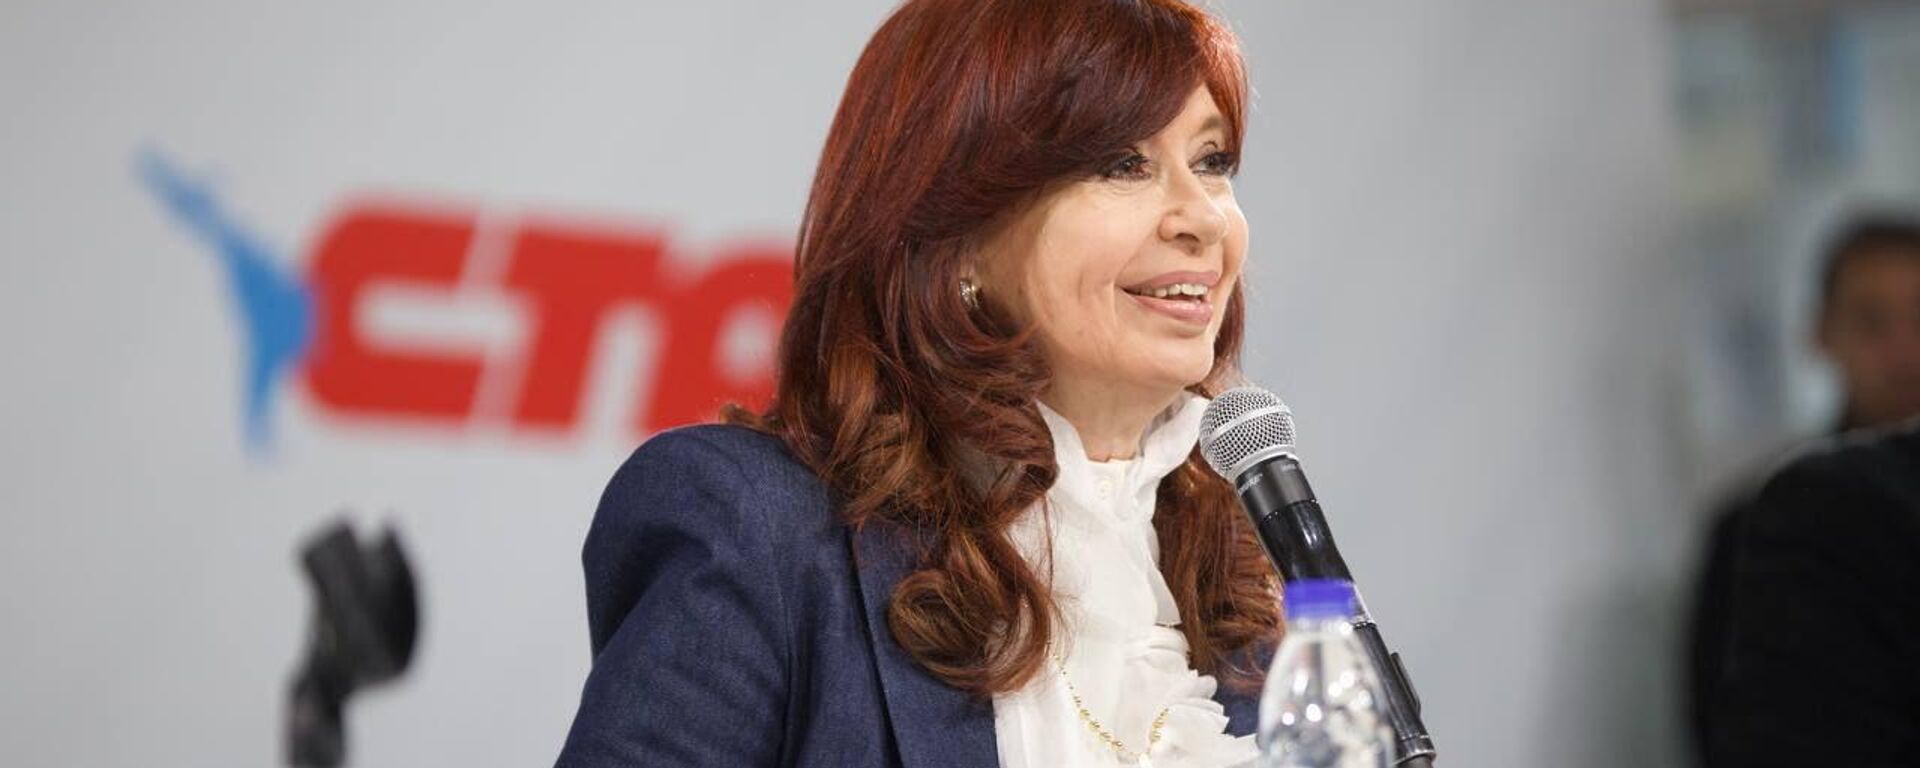 Cristina Fernández de Kirchner en el Plenario de la Central de Trabajadores de la Argentina (CTA) en Avellaneda - Sputnik Mundo, 1920, 05.09.2022